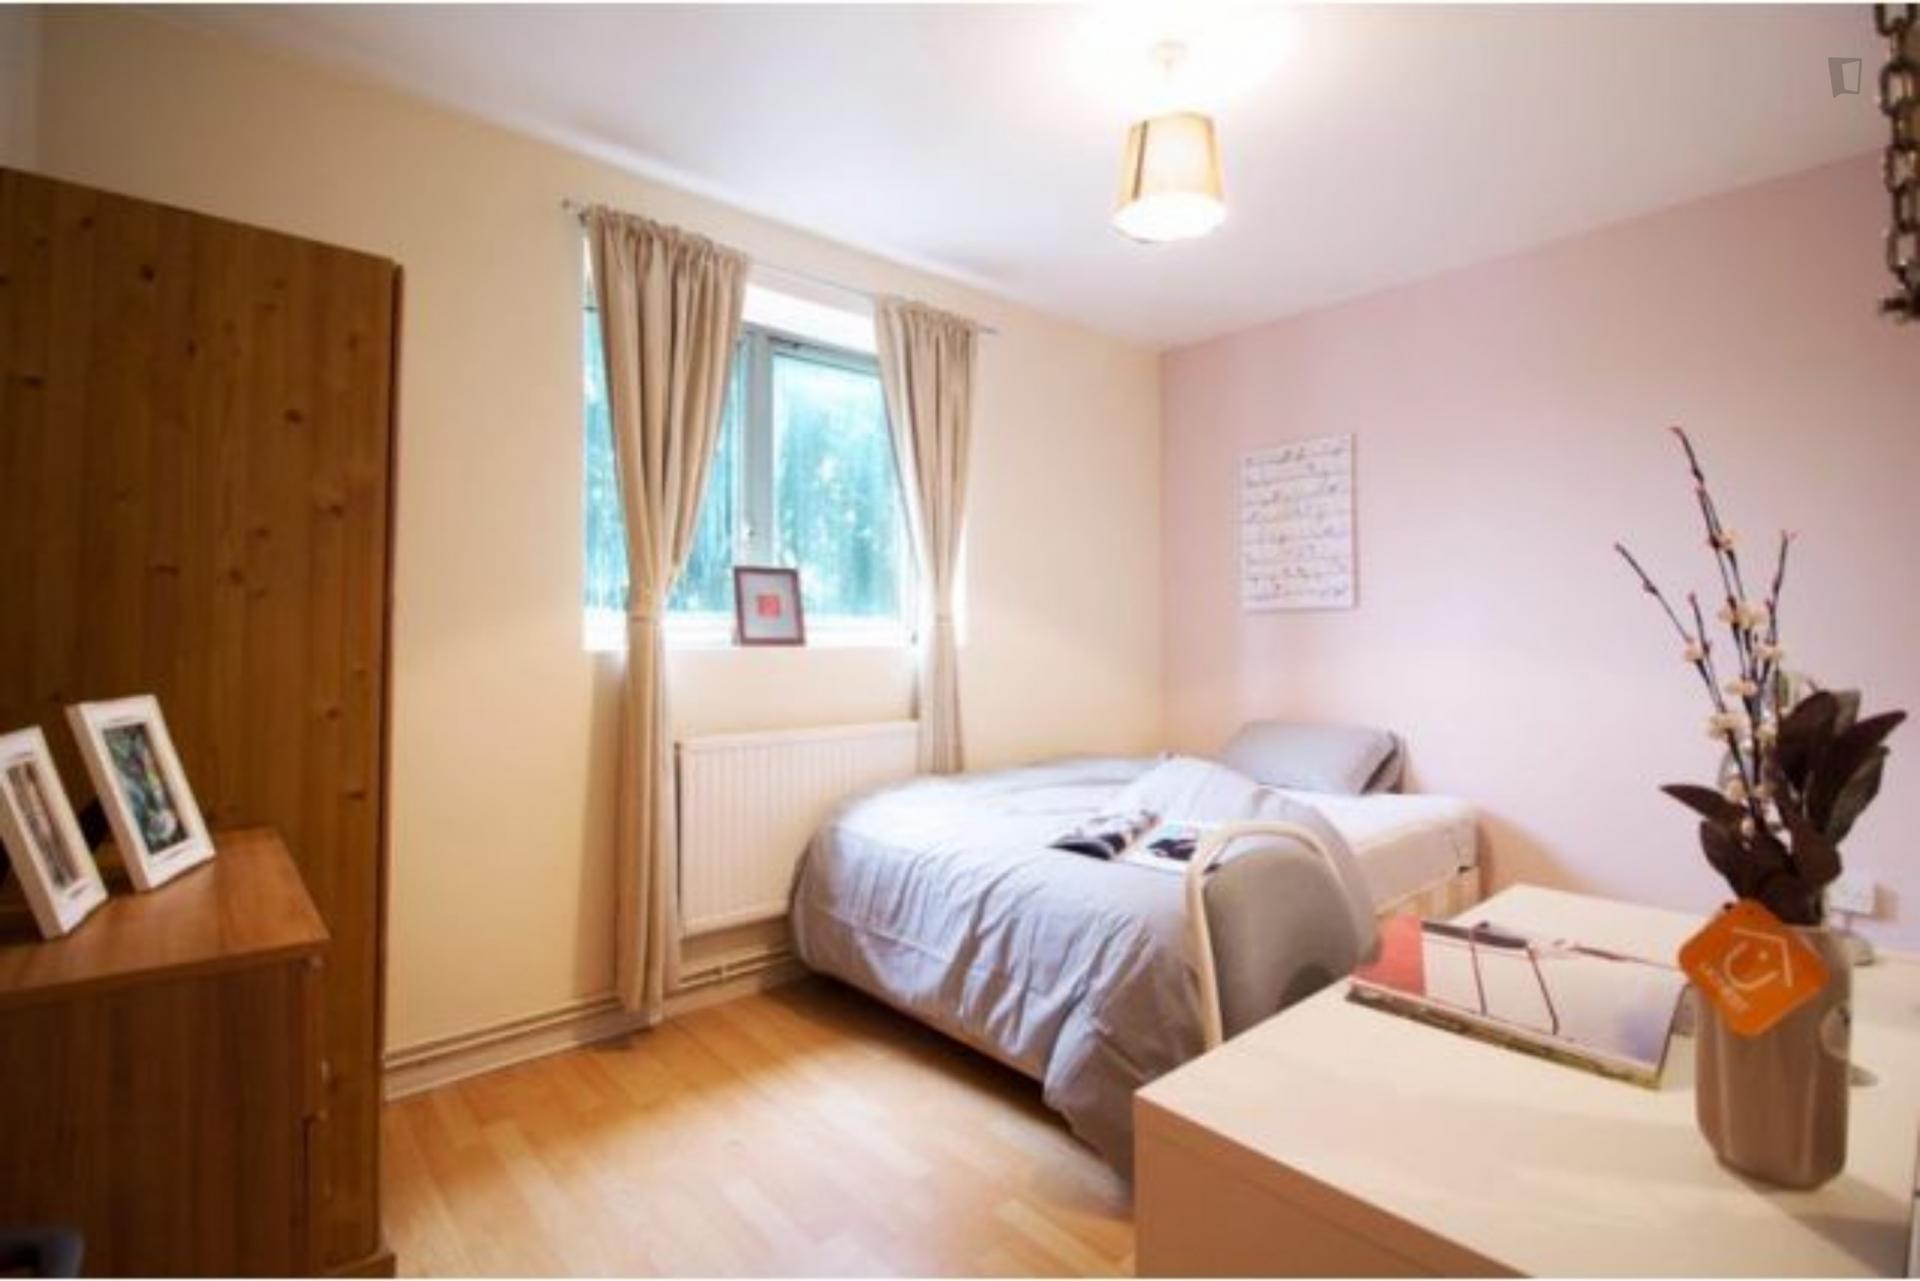 Wallwood - Furnished bedroom in London